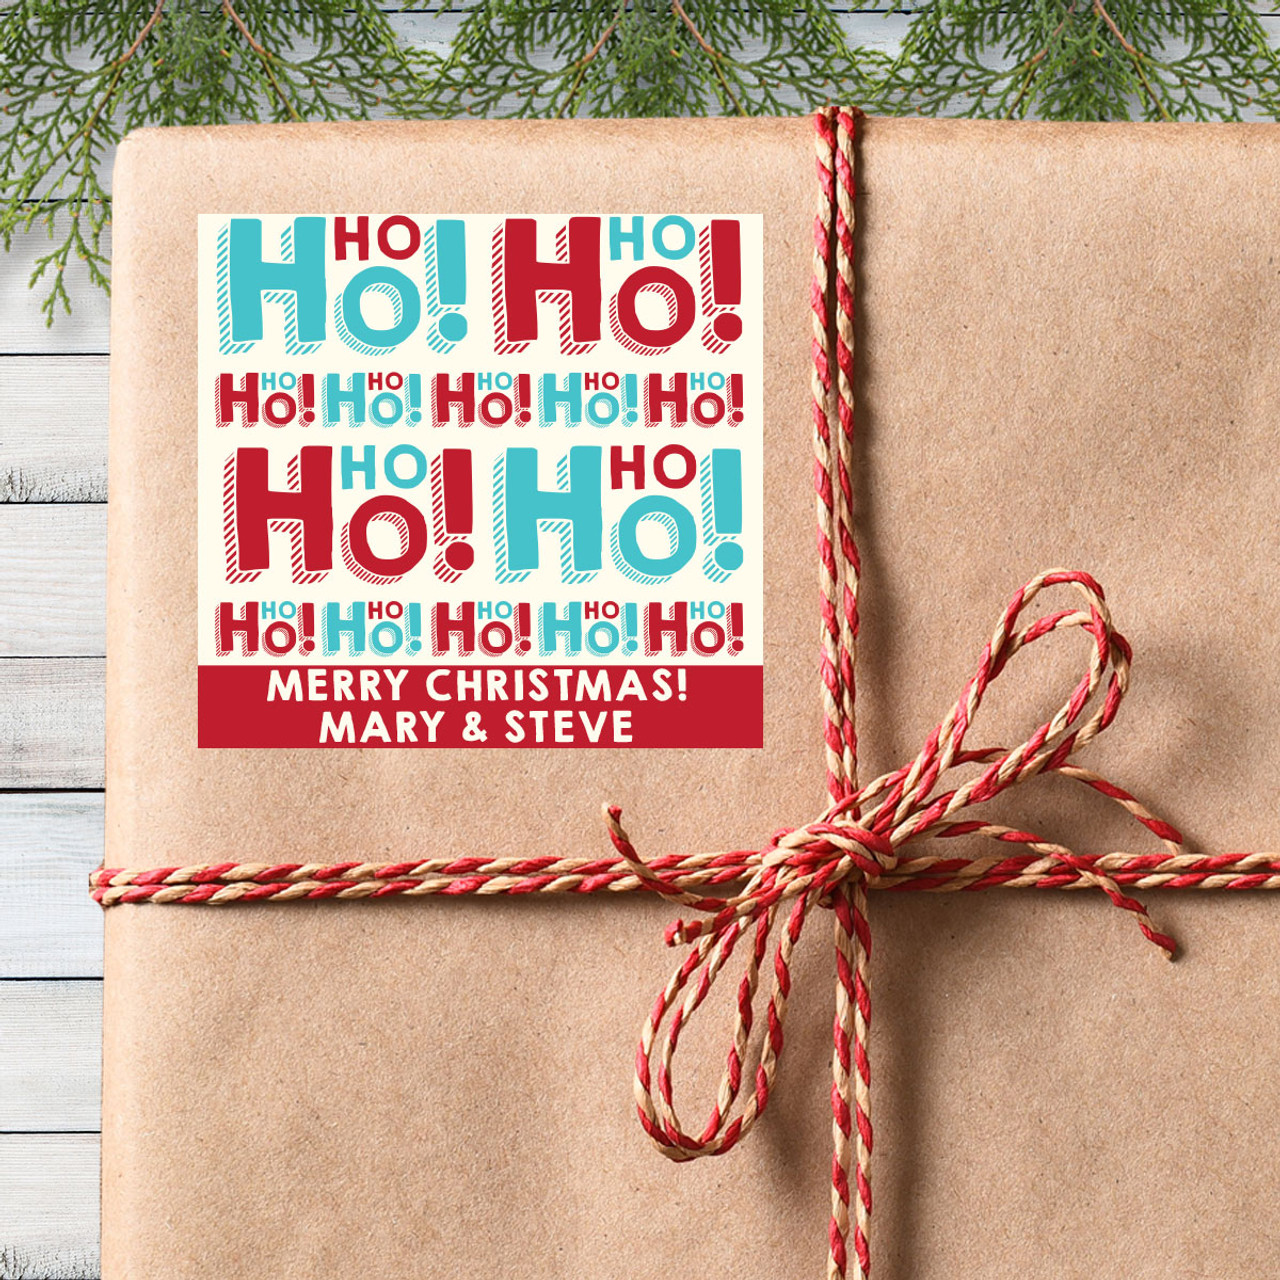 https://cdn11.bigcommerce.com/s-5grzuu6/images/stencil/1280x1280/products/5389/38346/Custom_Christmas_Gift_Stickers-Ho_Ho_Holiday_4__19497.1605312367.jpg?c=2